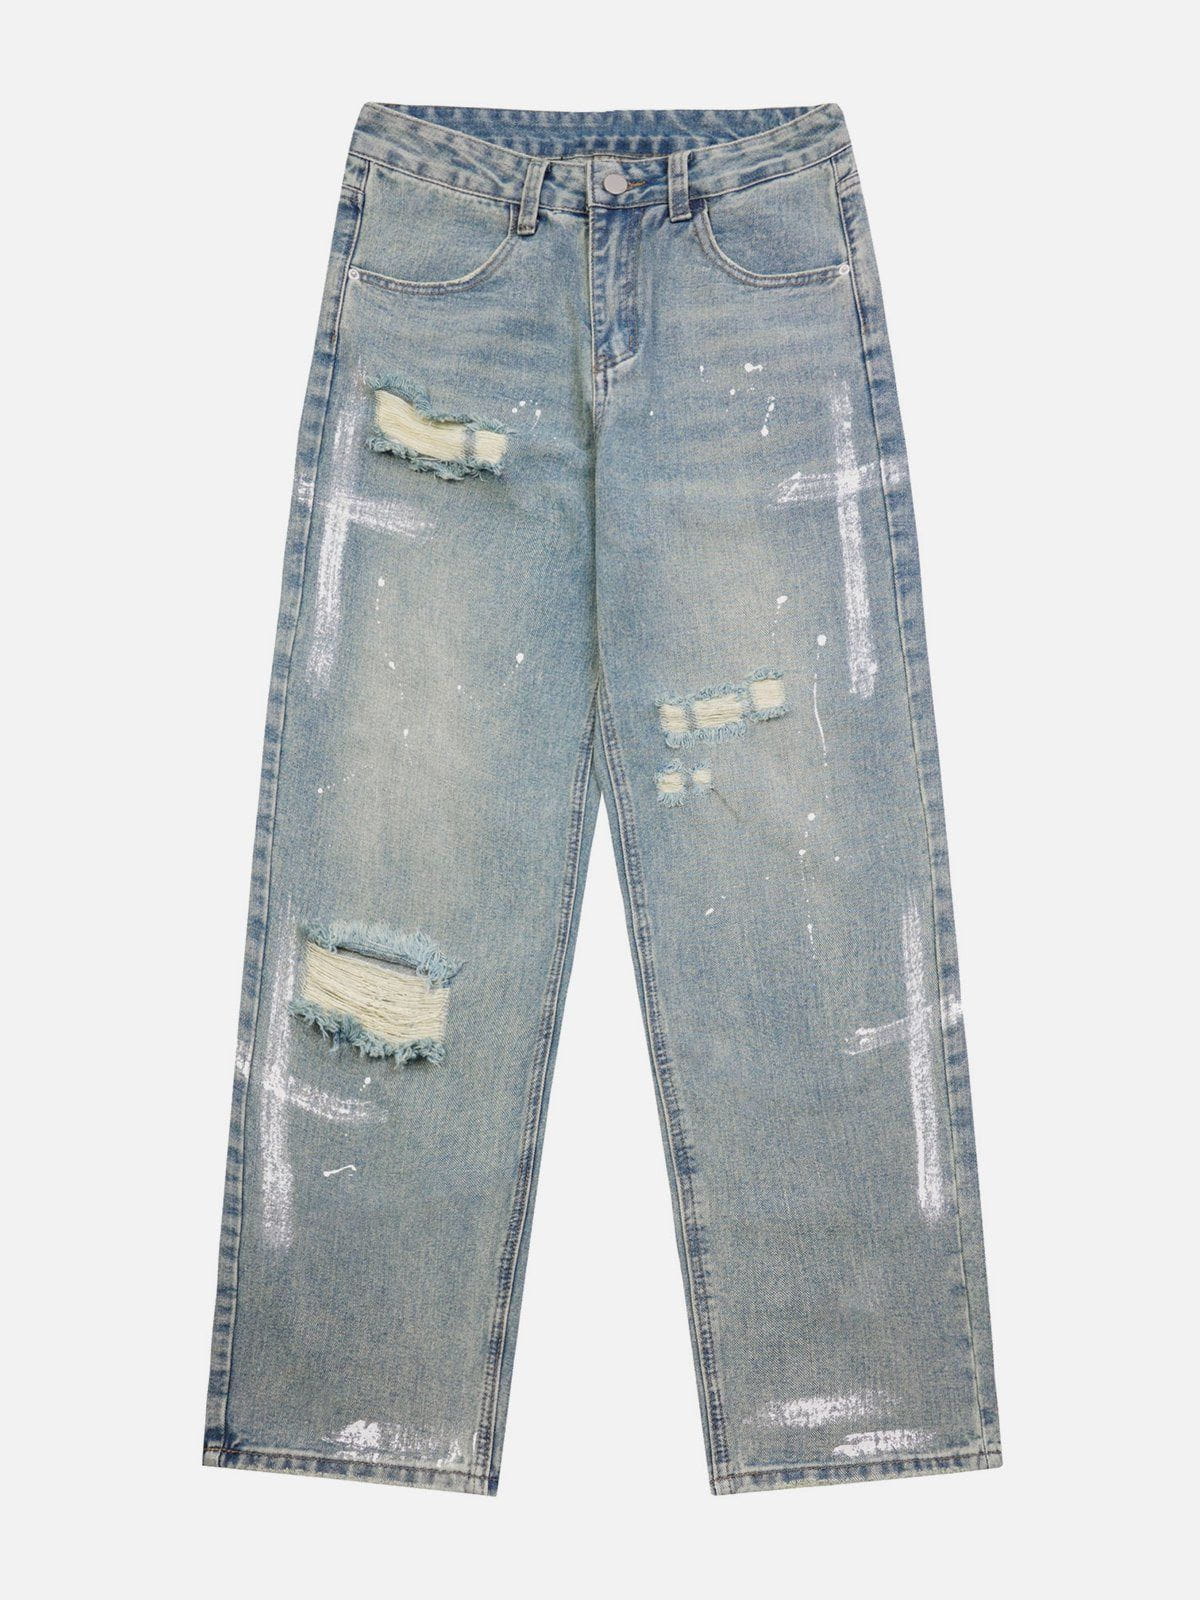 Eprezzy® - Hand Painted Cross Hole Jeans Streetwear Fashion - eprezzy.com